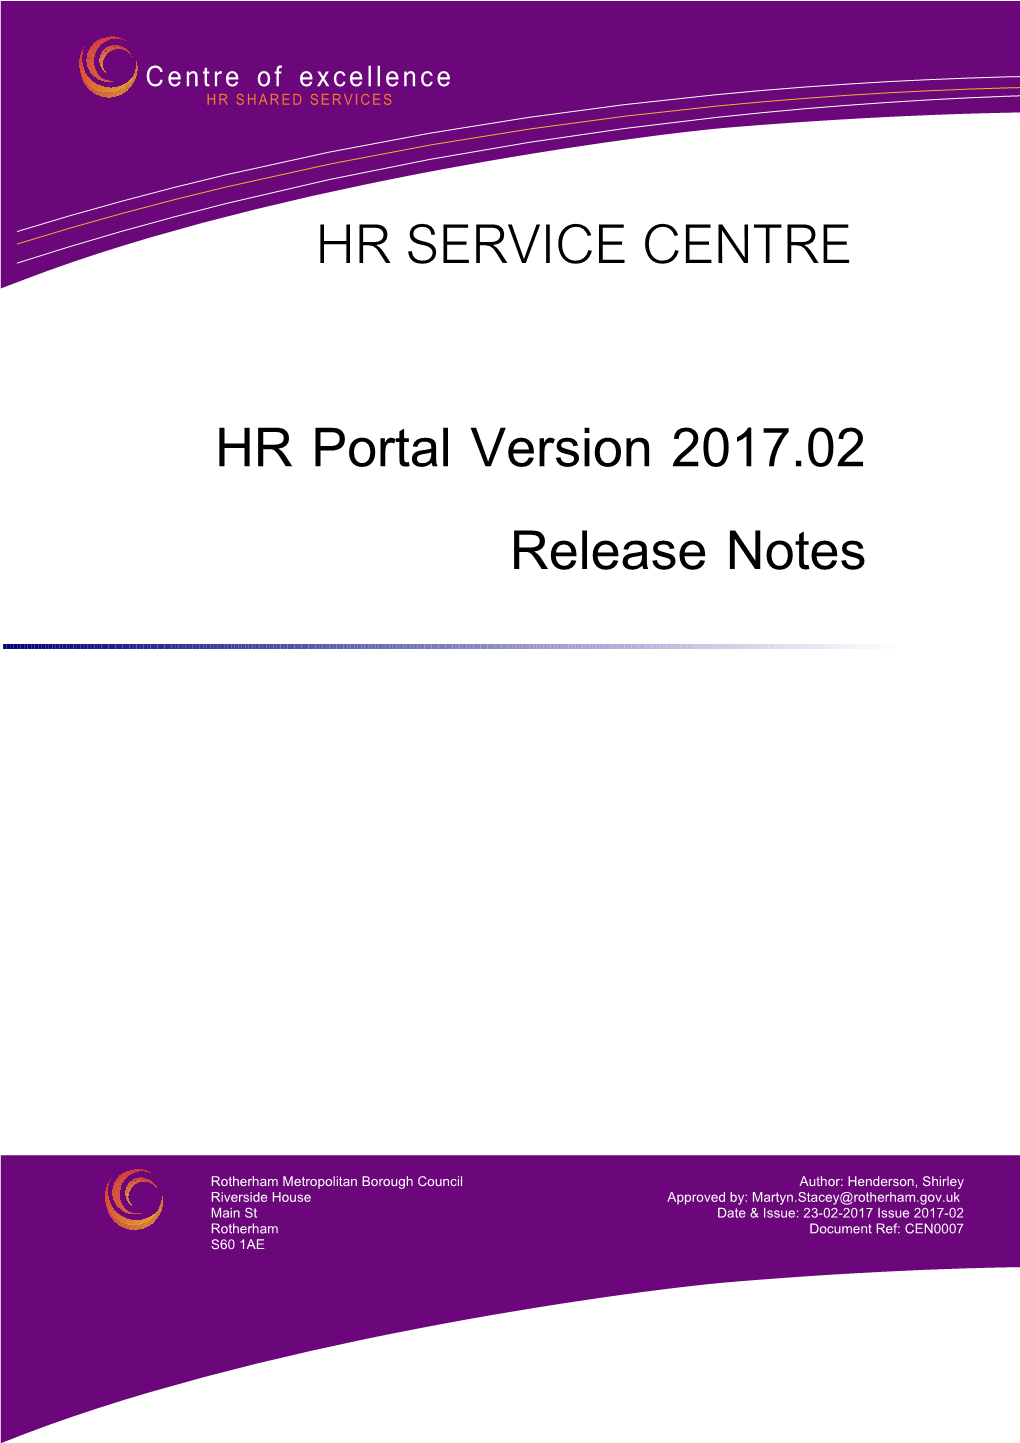 HR Portal Version 2017.02 Release Notes